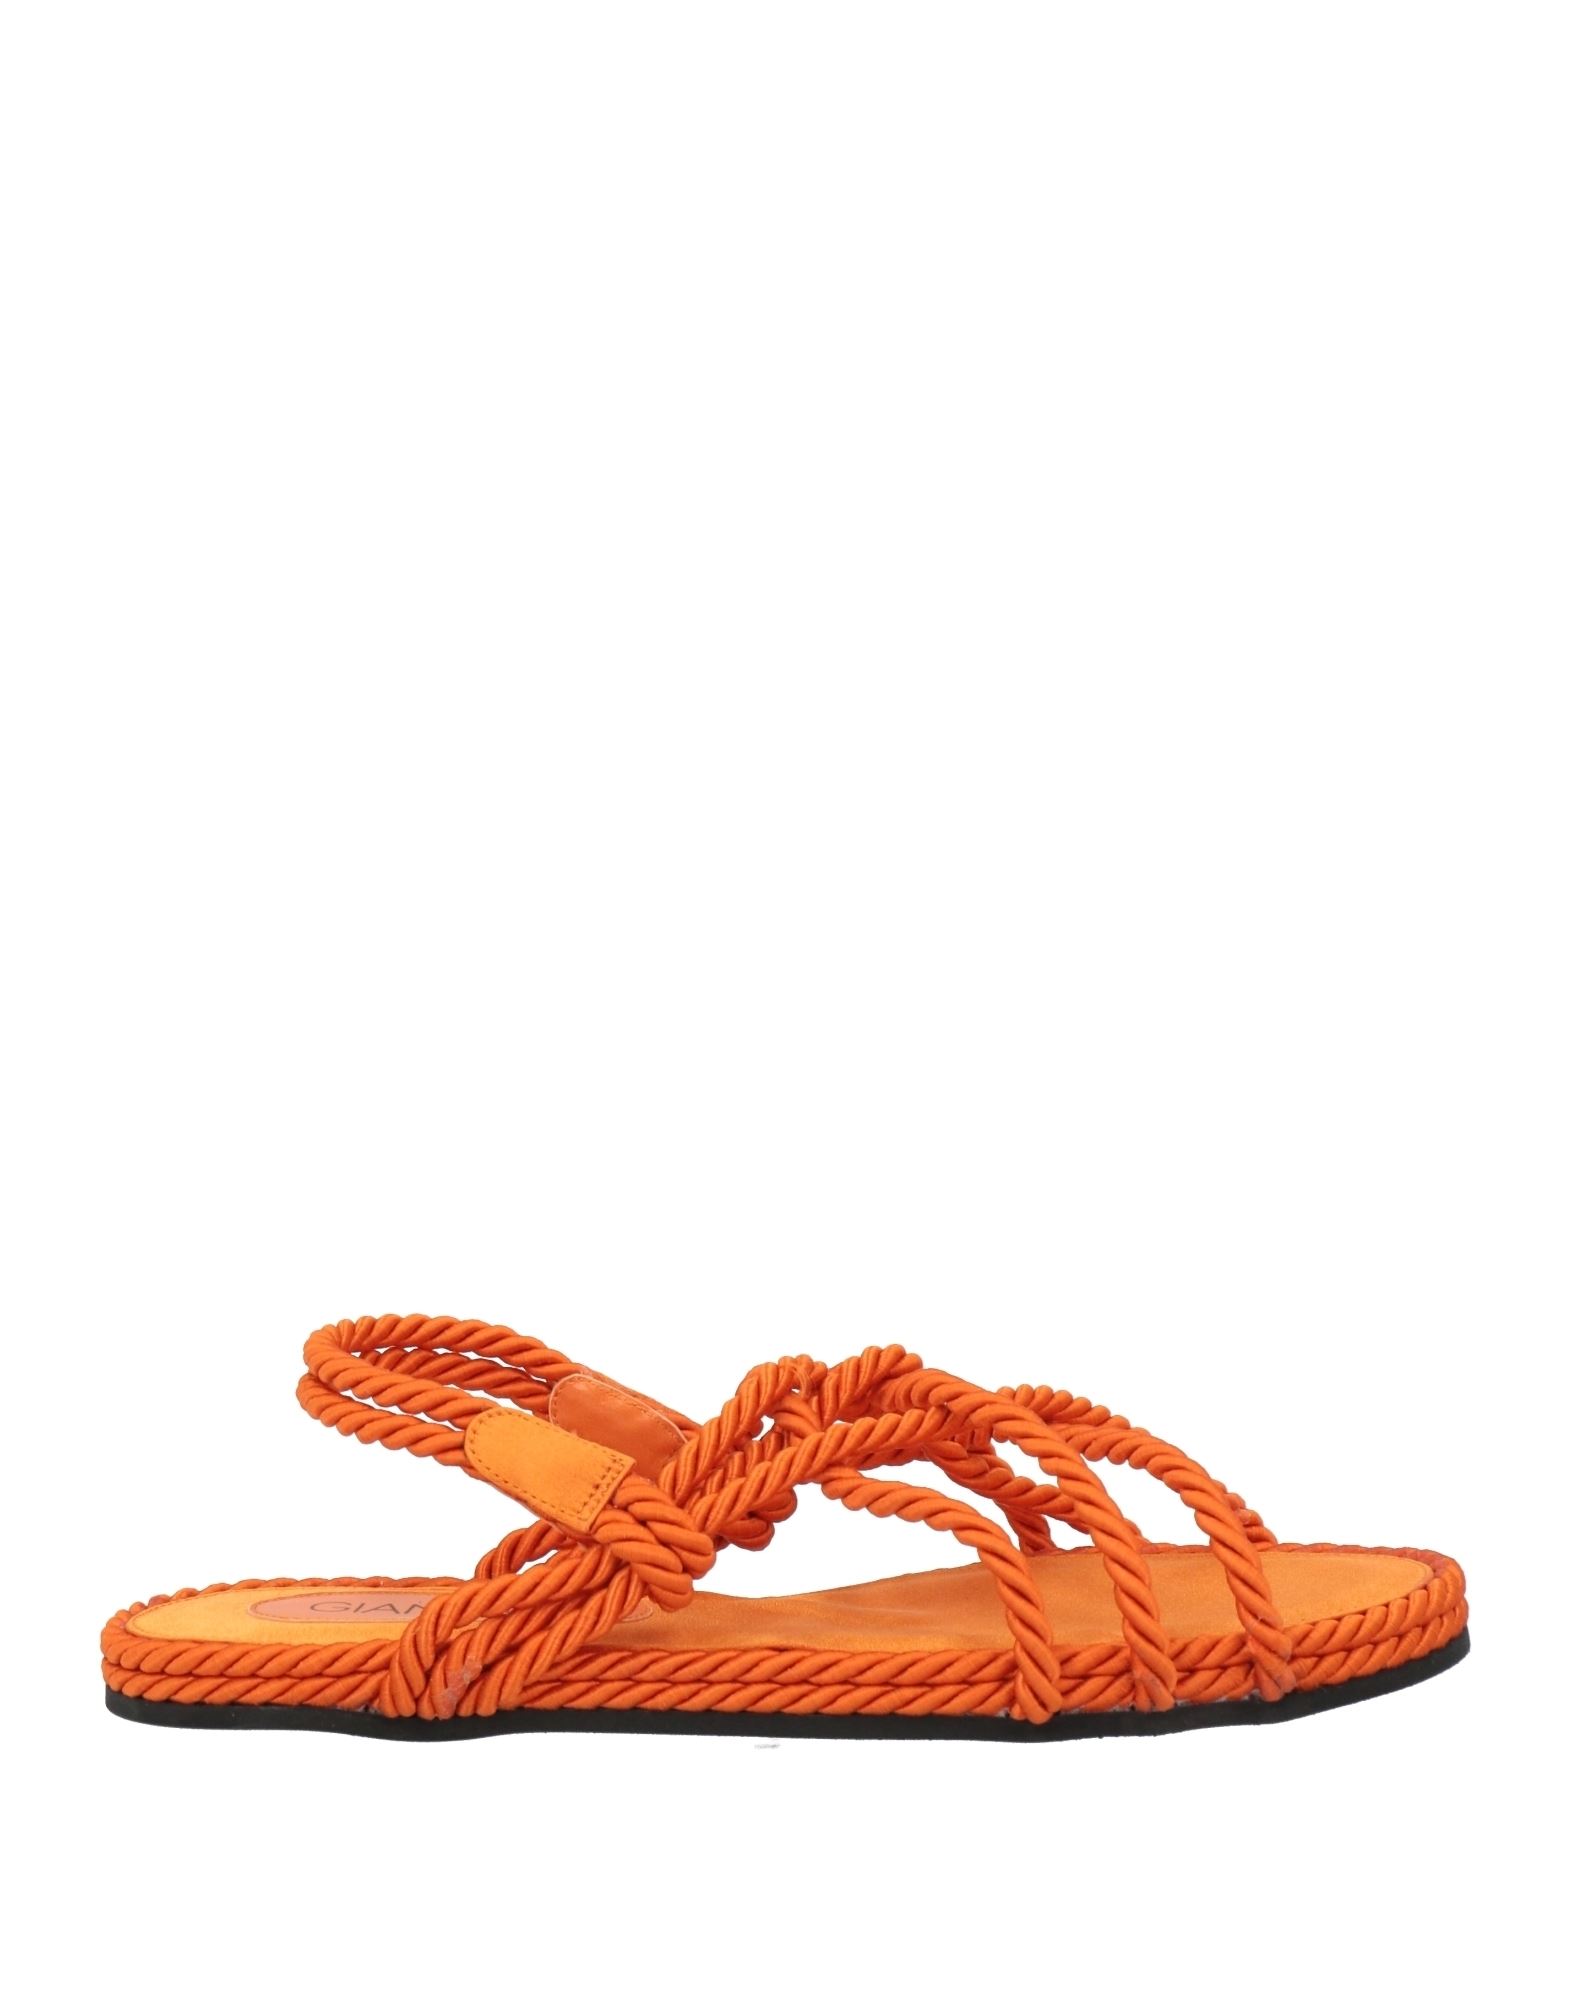 Giannico Sandals In Mandarin